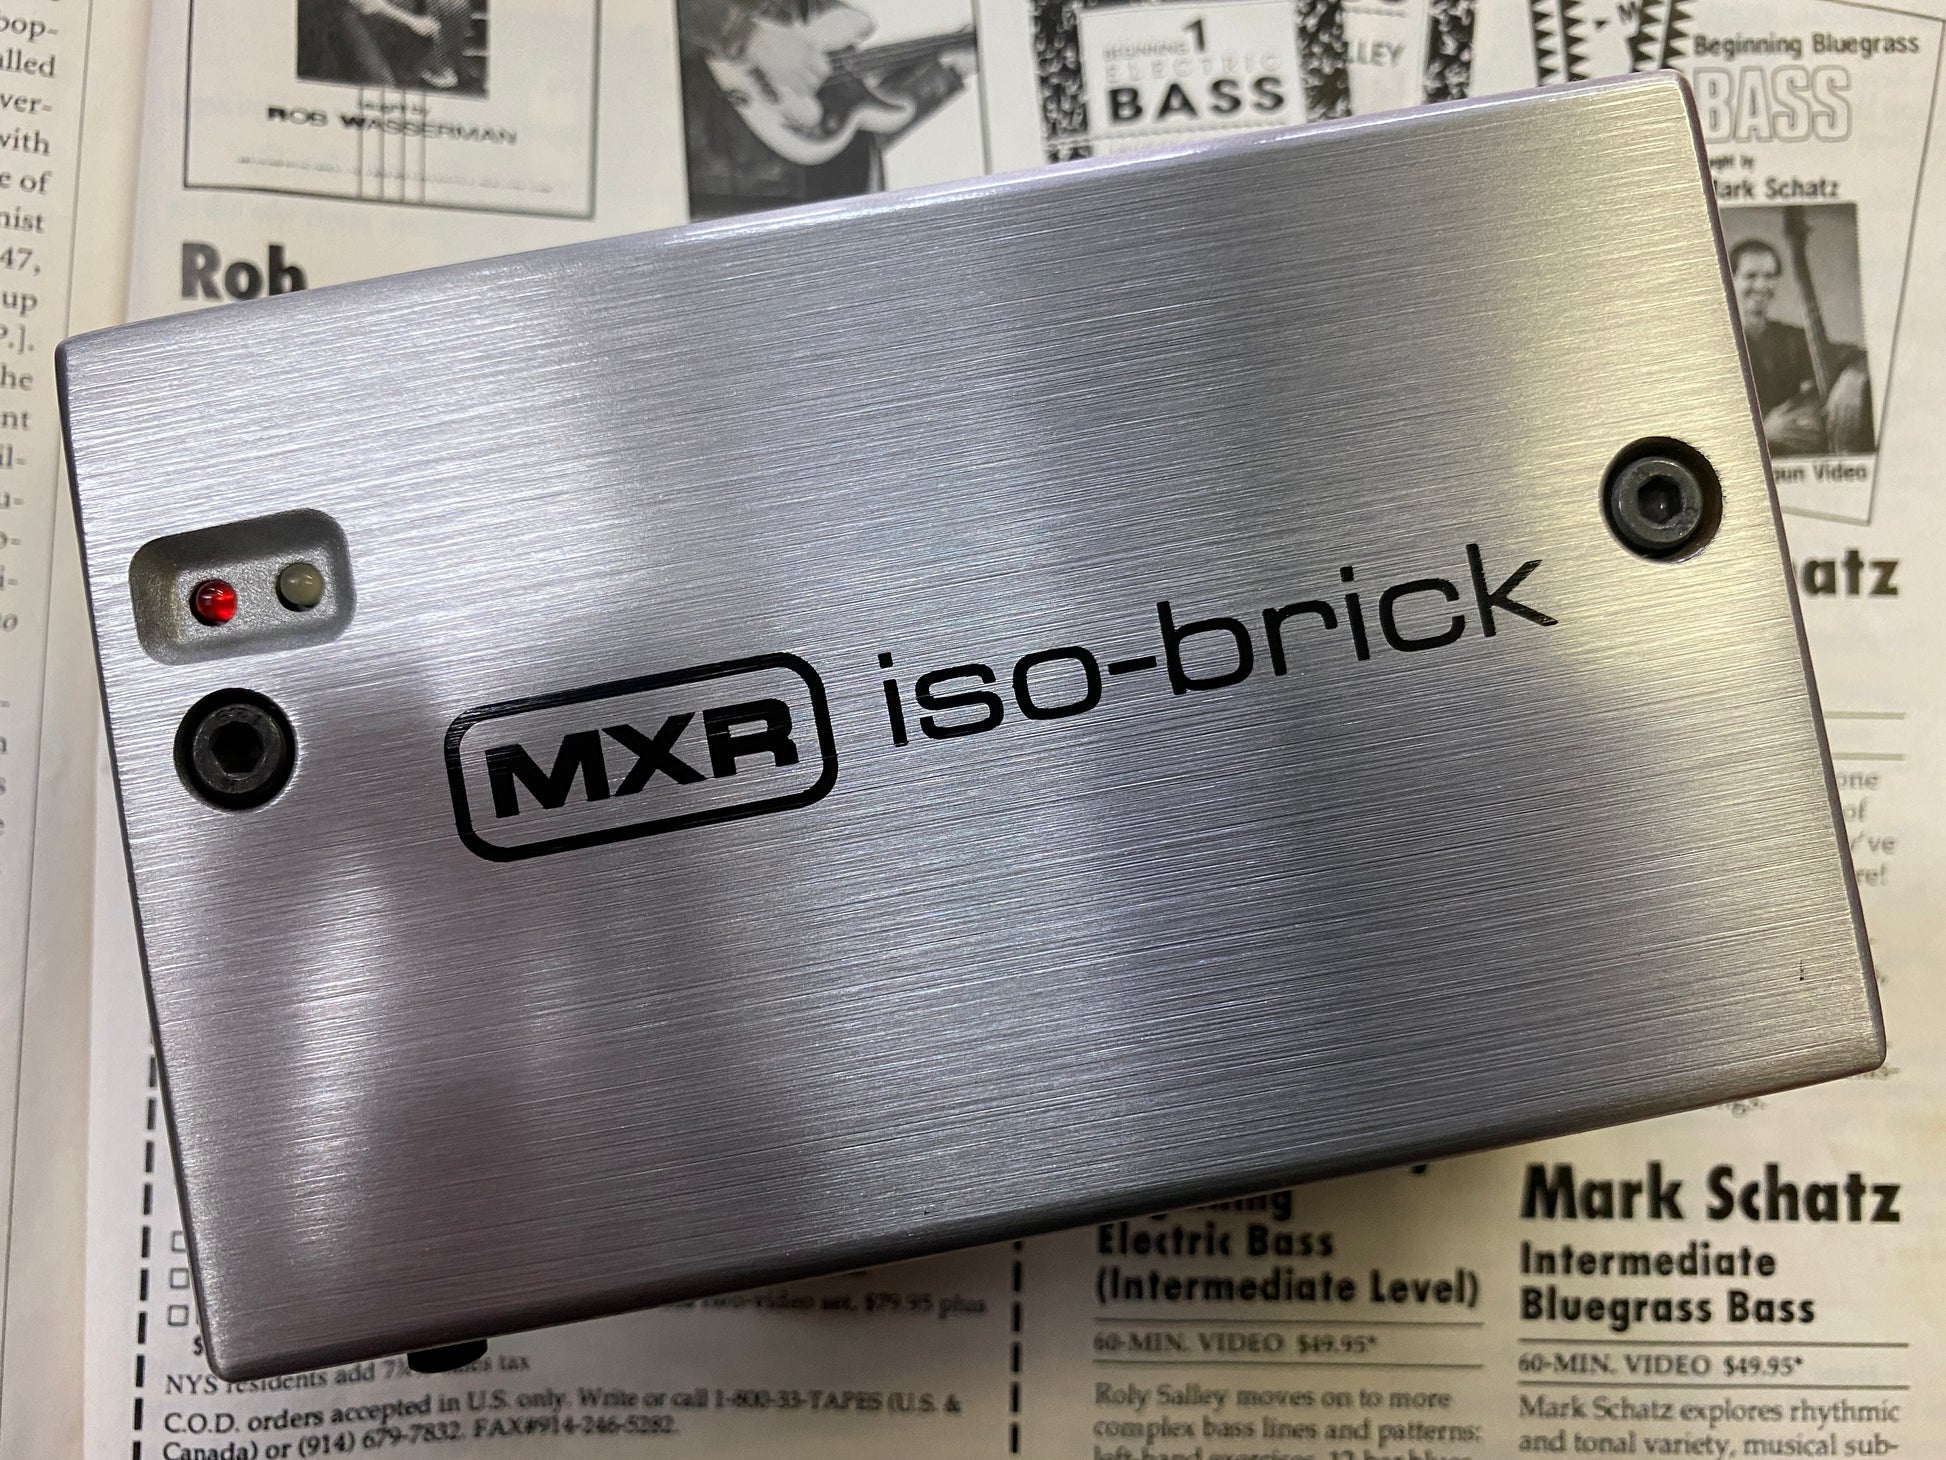 MXR ISO BRICK Power Supply